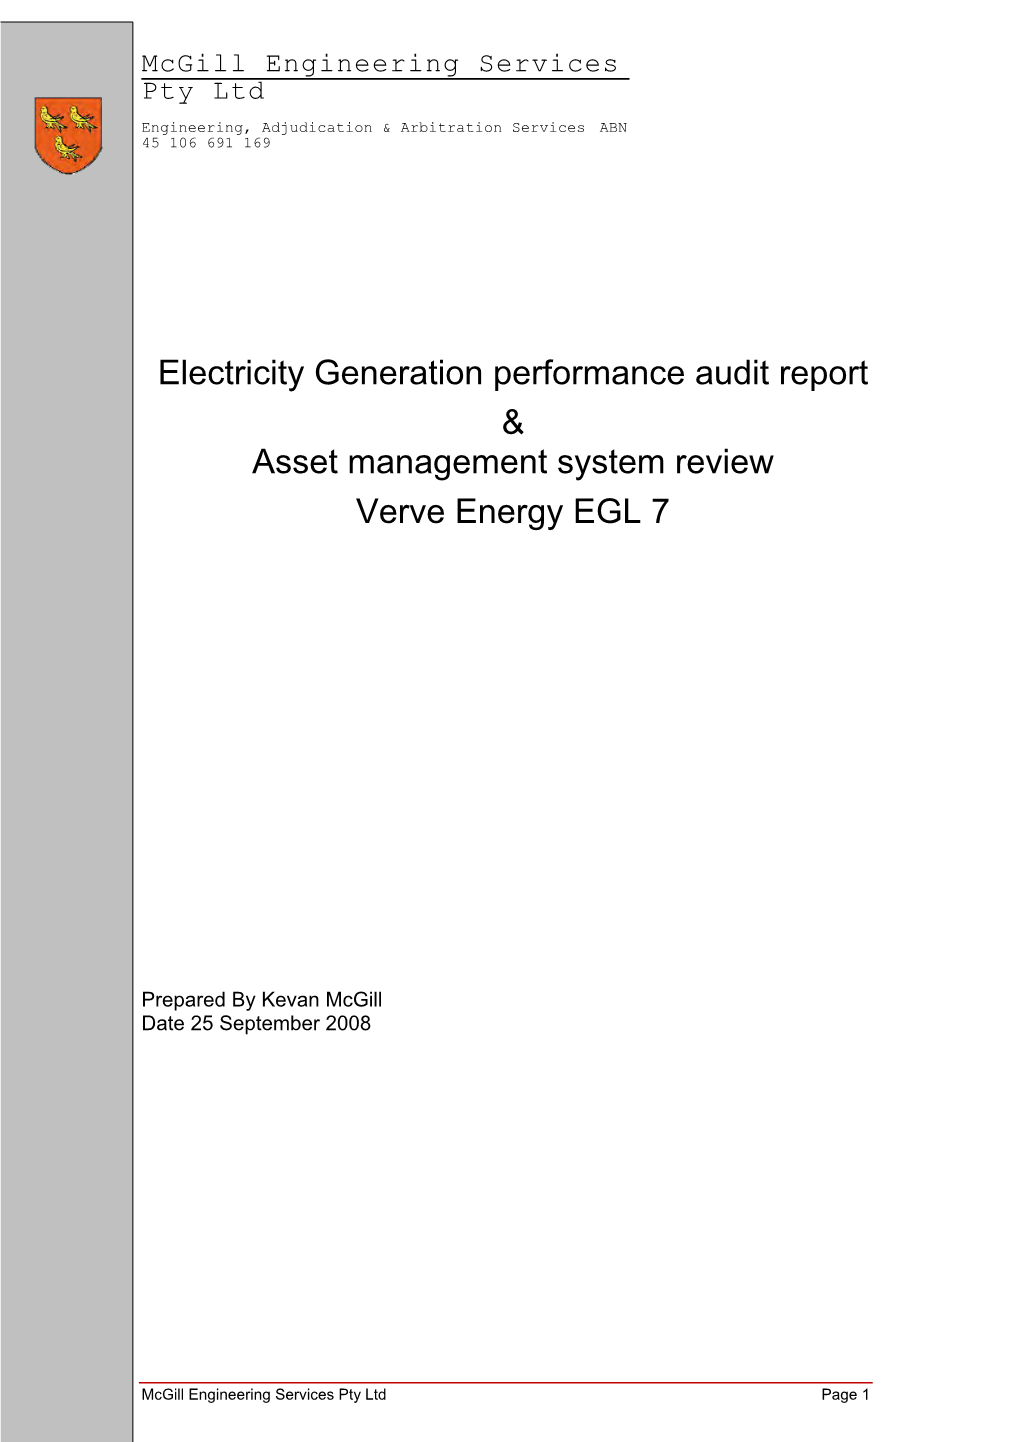 Electricity Generation Performance Audit Report & Asset Management